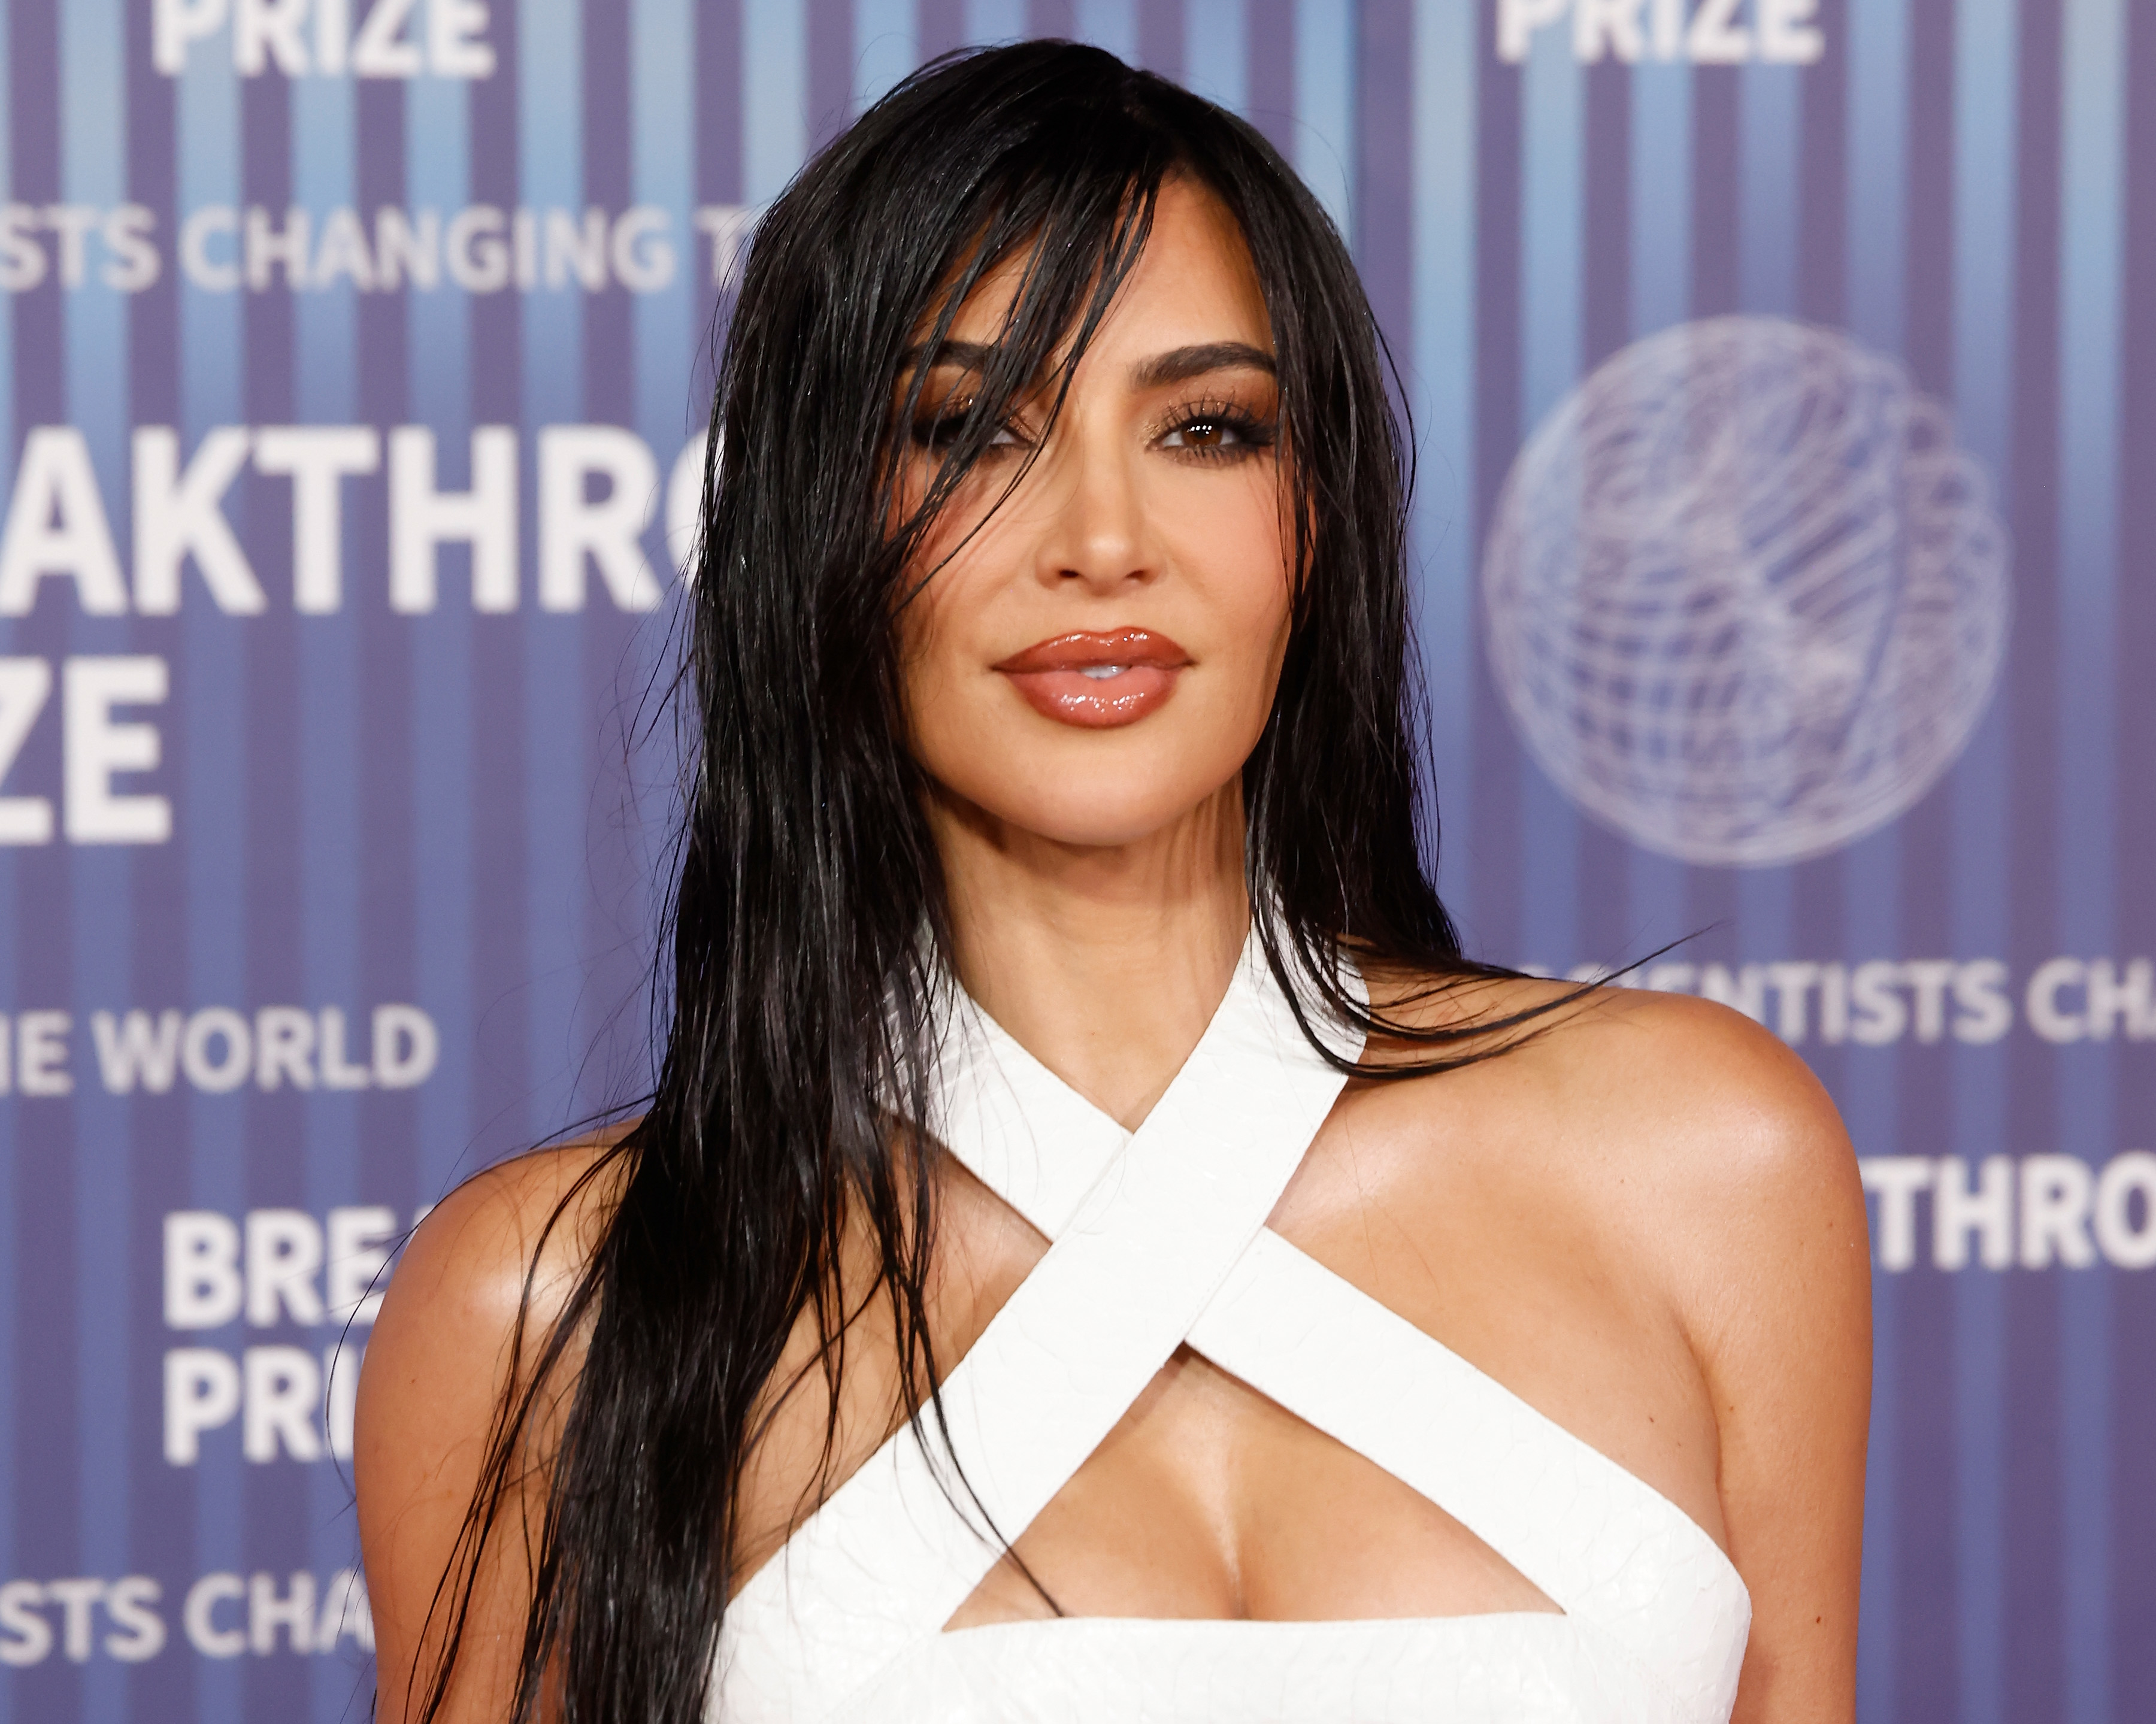 Kim Kardashian in a white crisscross top at a breakthrough event